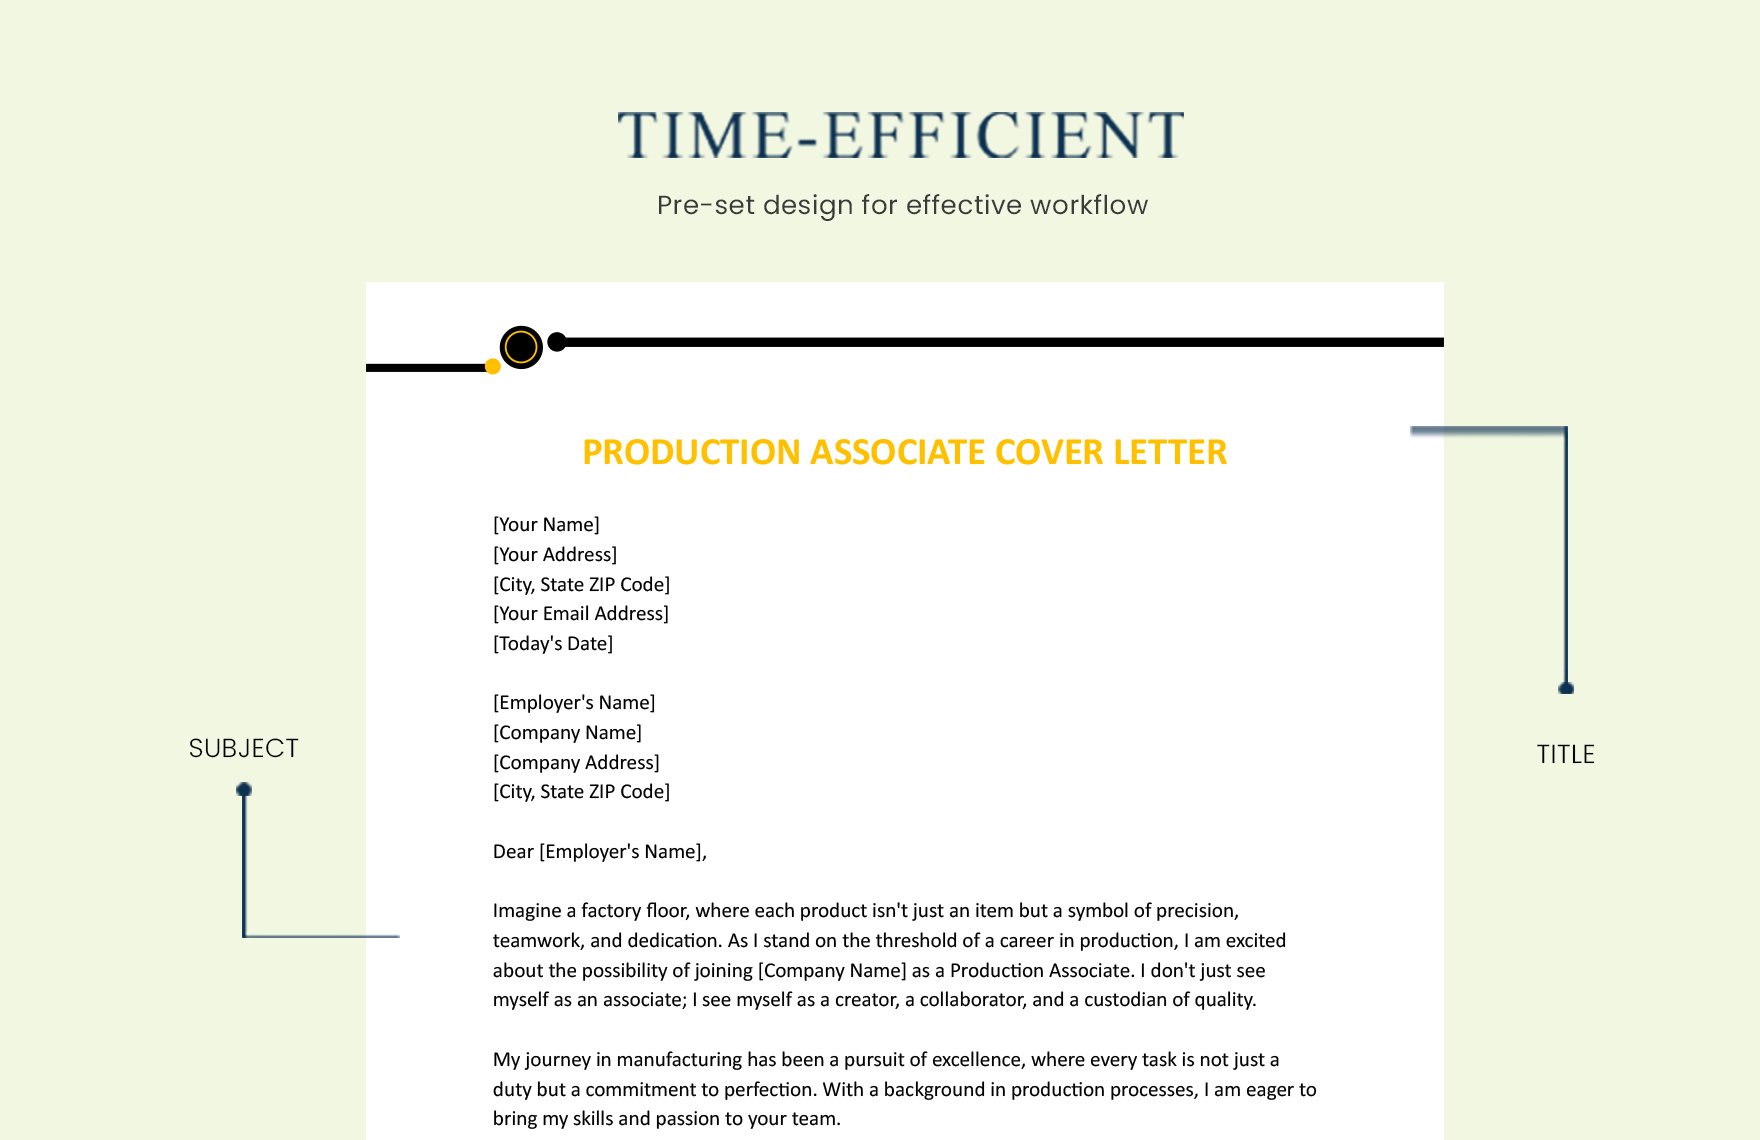 Production Associate Cover Letter